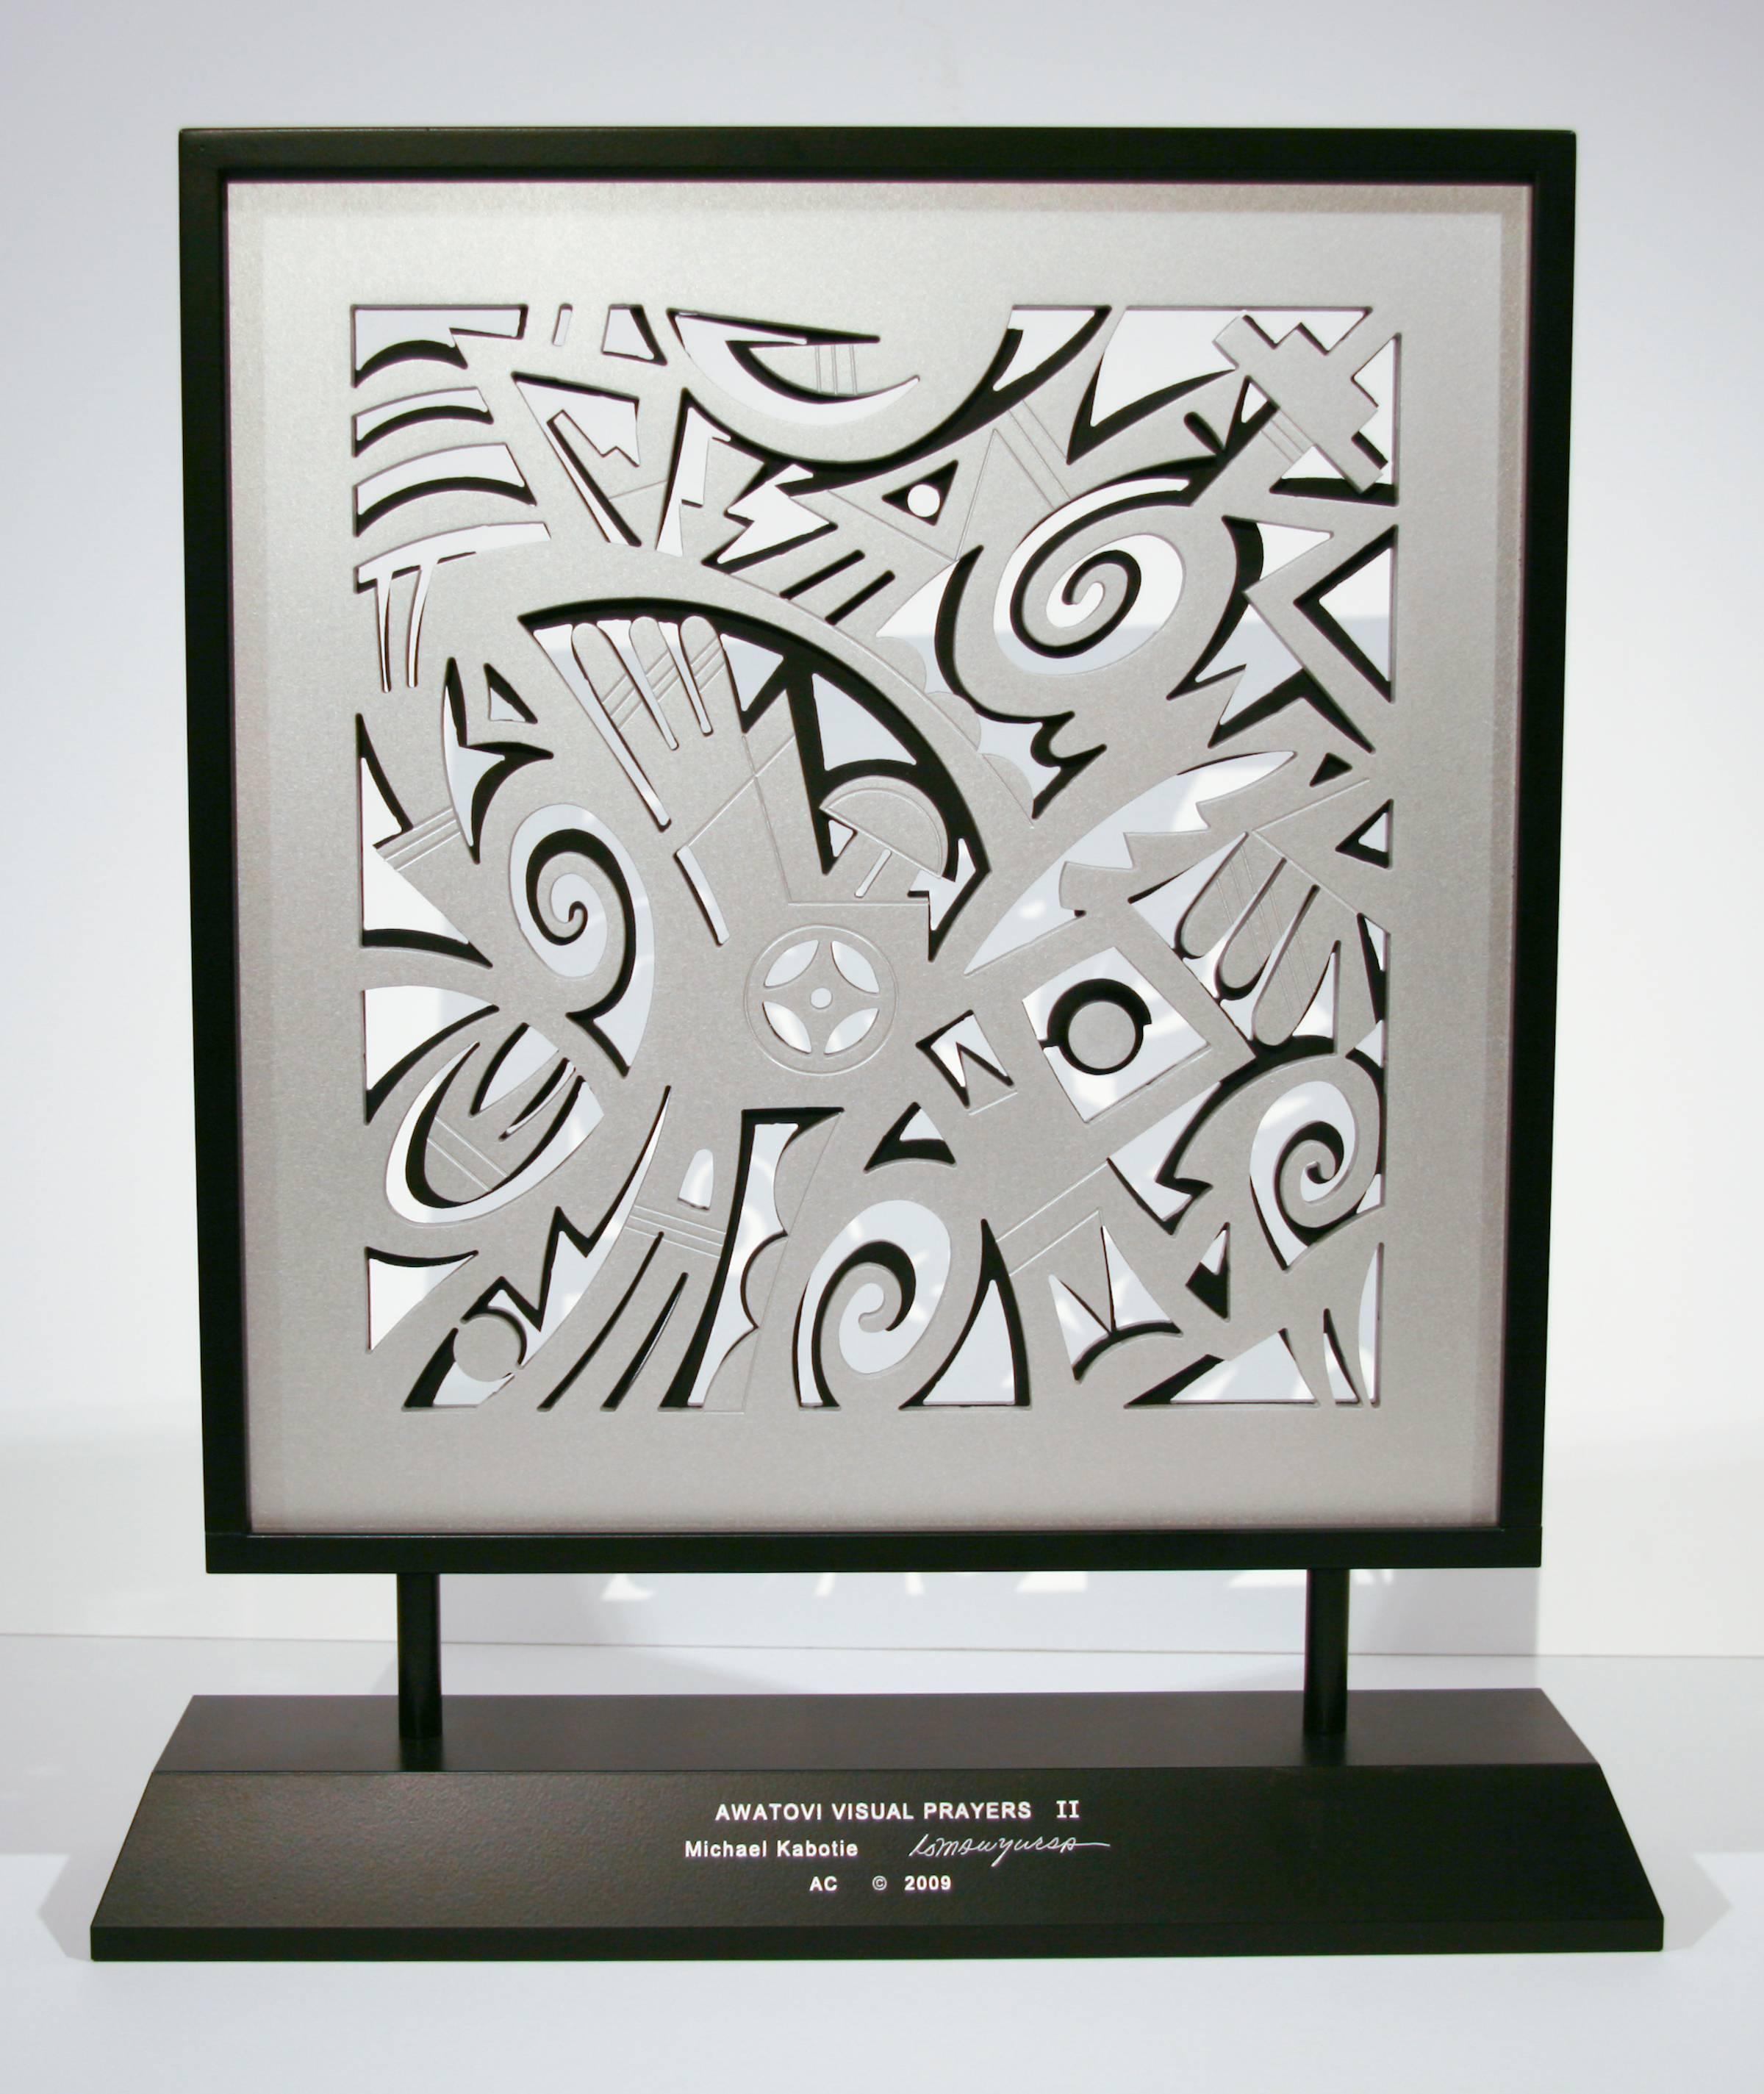 Awatovi Visual Prayers, Michael Kabotie Hopi overlay, silver black contemporary - Art by Michael Kabotie (Lomawywesa)